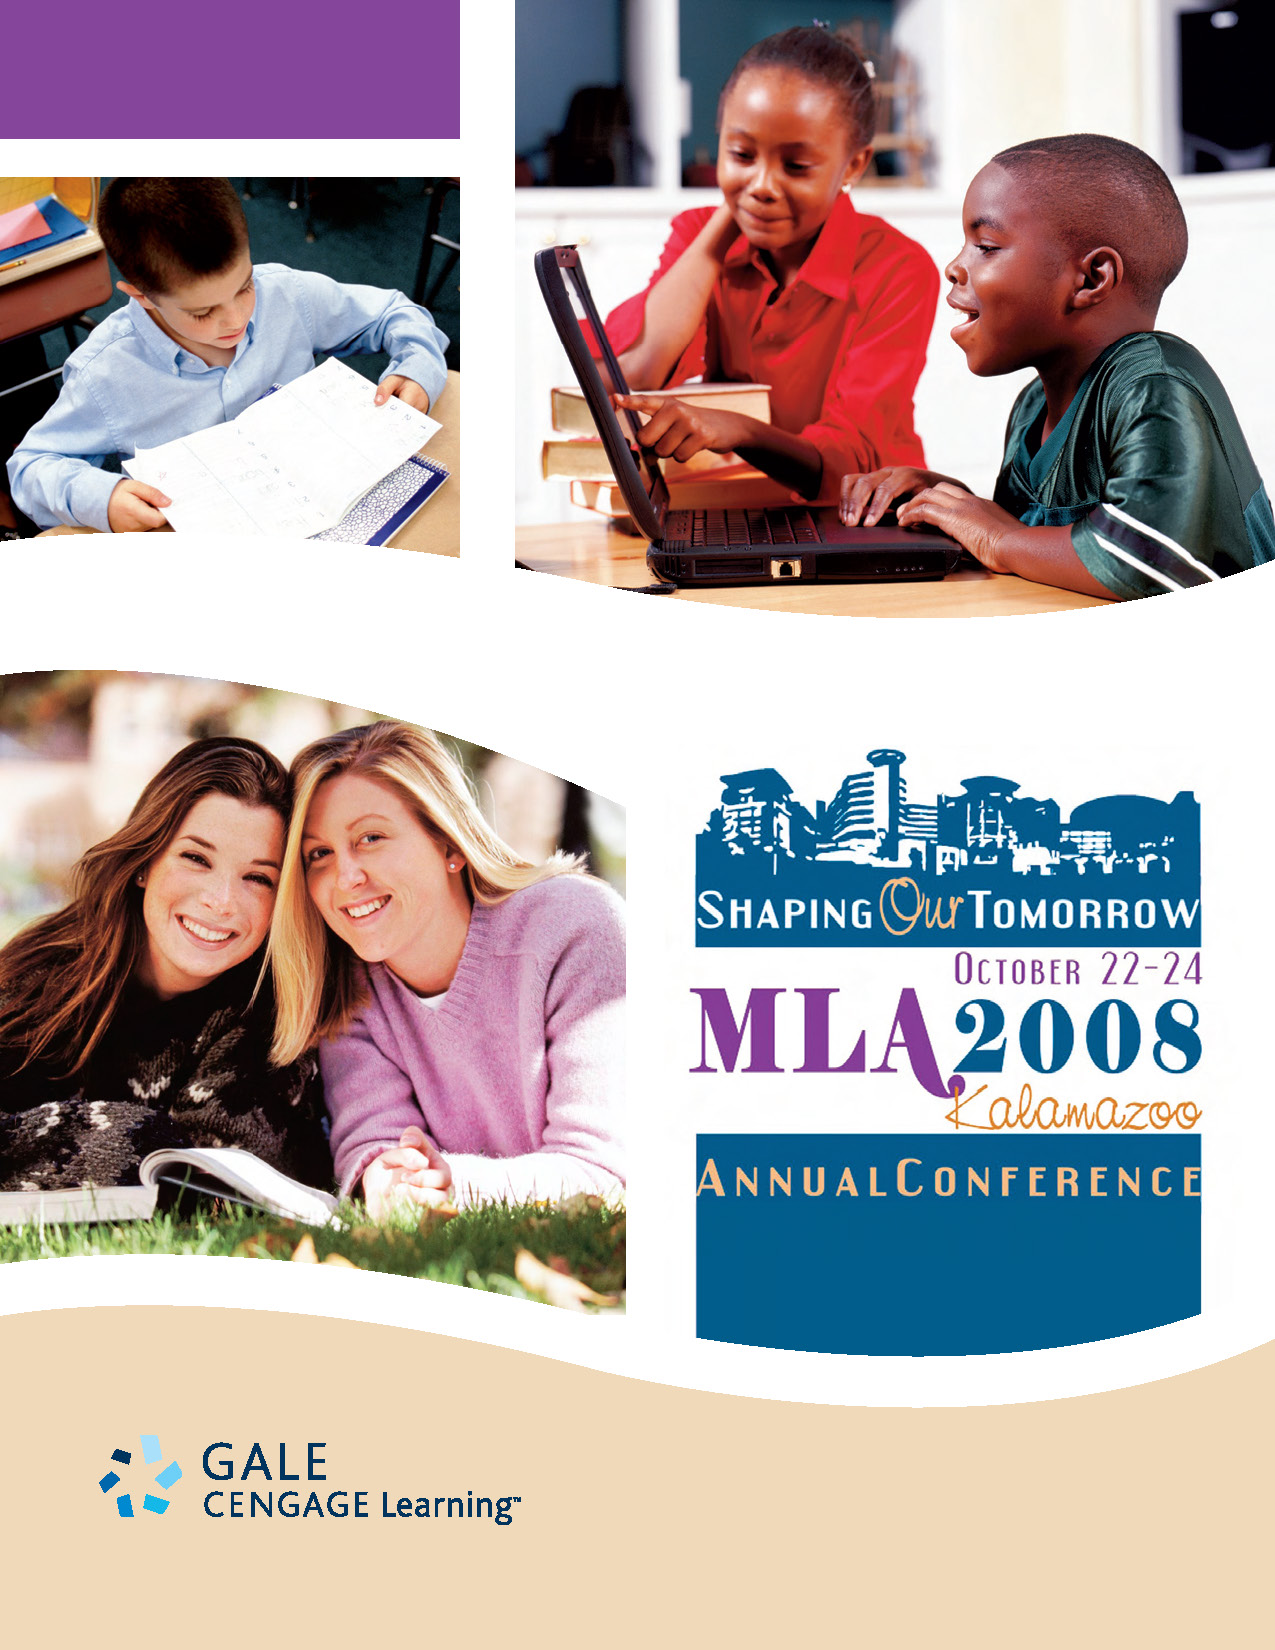 MLA 2008 Program Book Cover image - linked to program book pdf